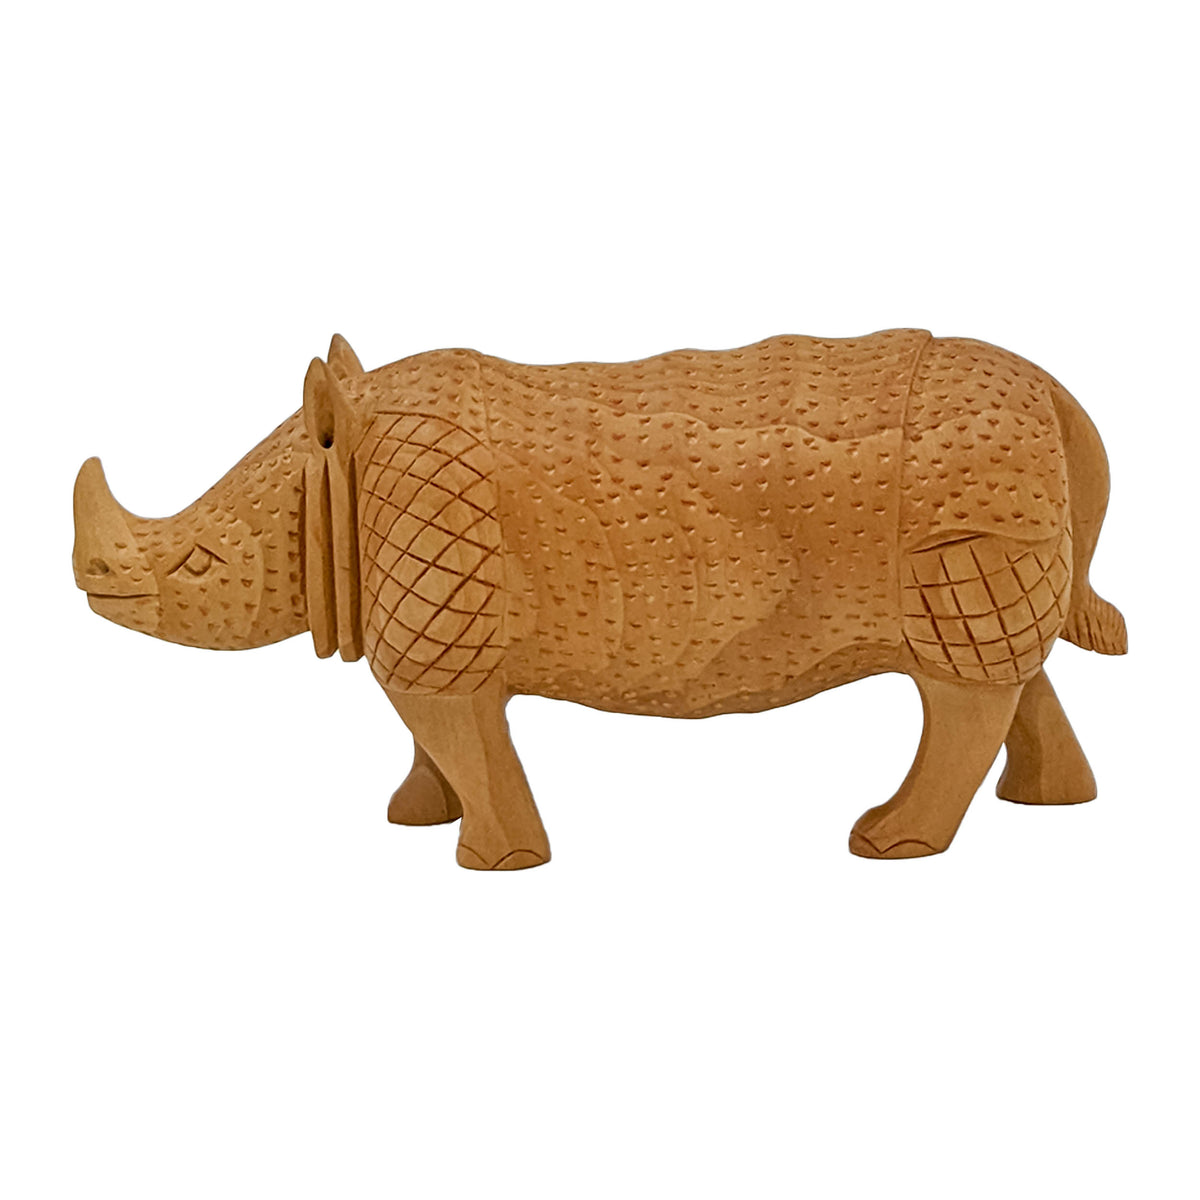 Handmade Wooden Rhinoceros With Carving Handicraft - Unique Home Decor Piece